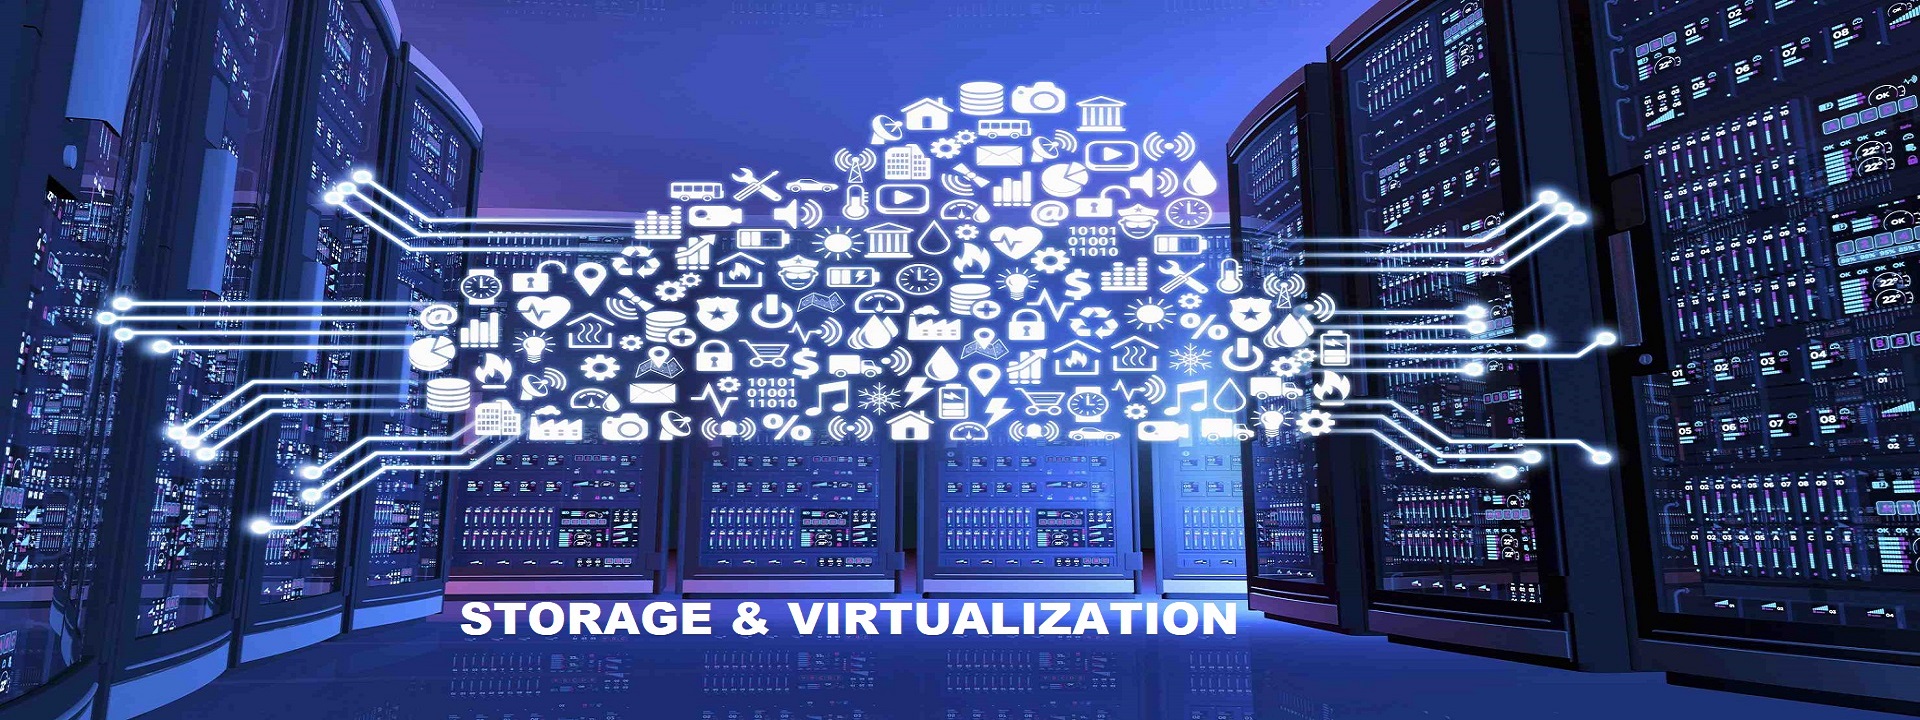 Storage & Virtualization